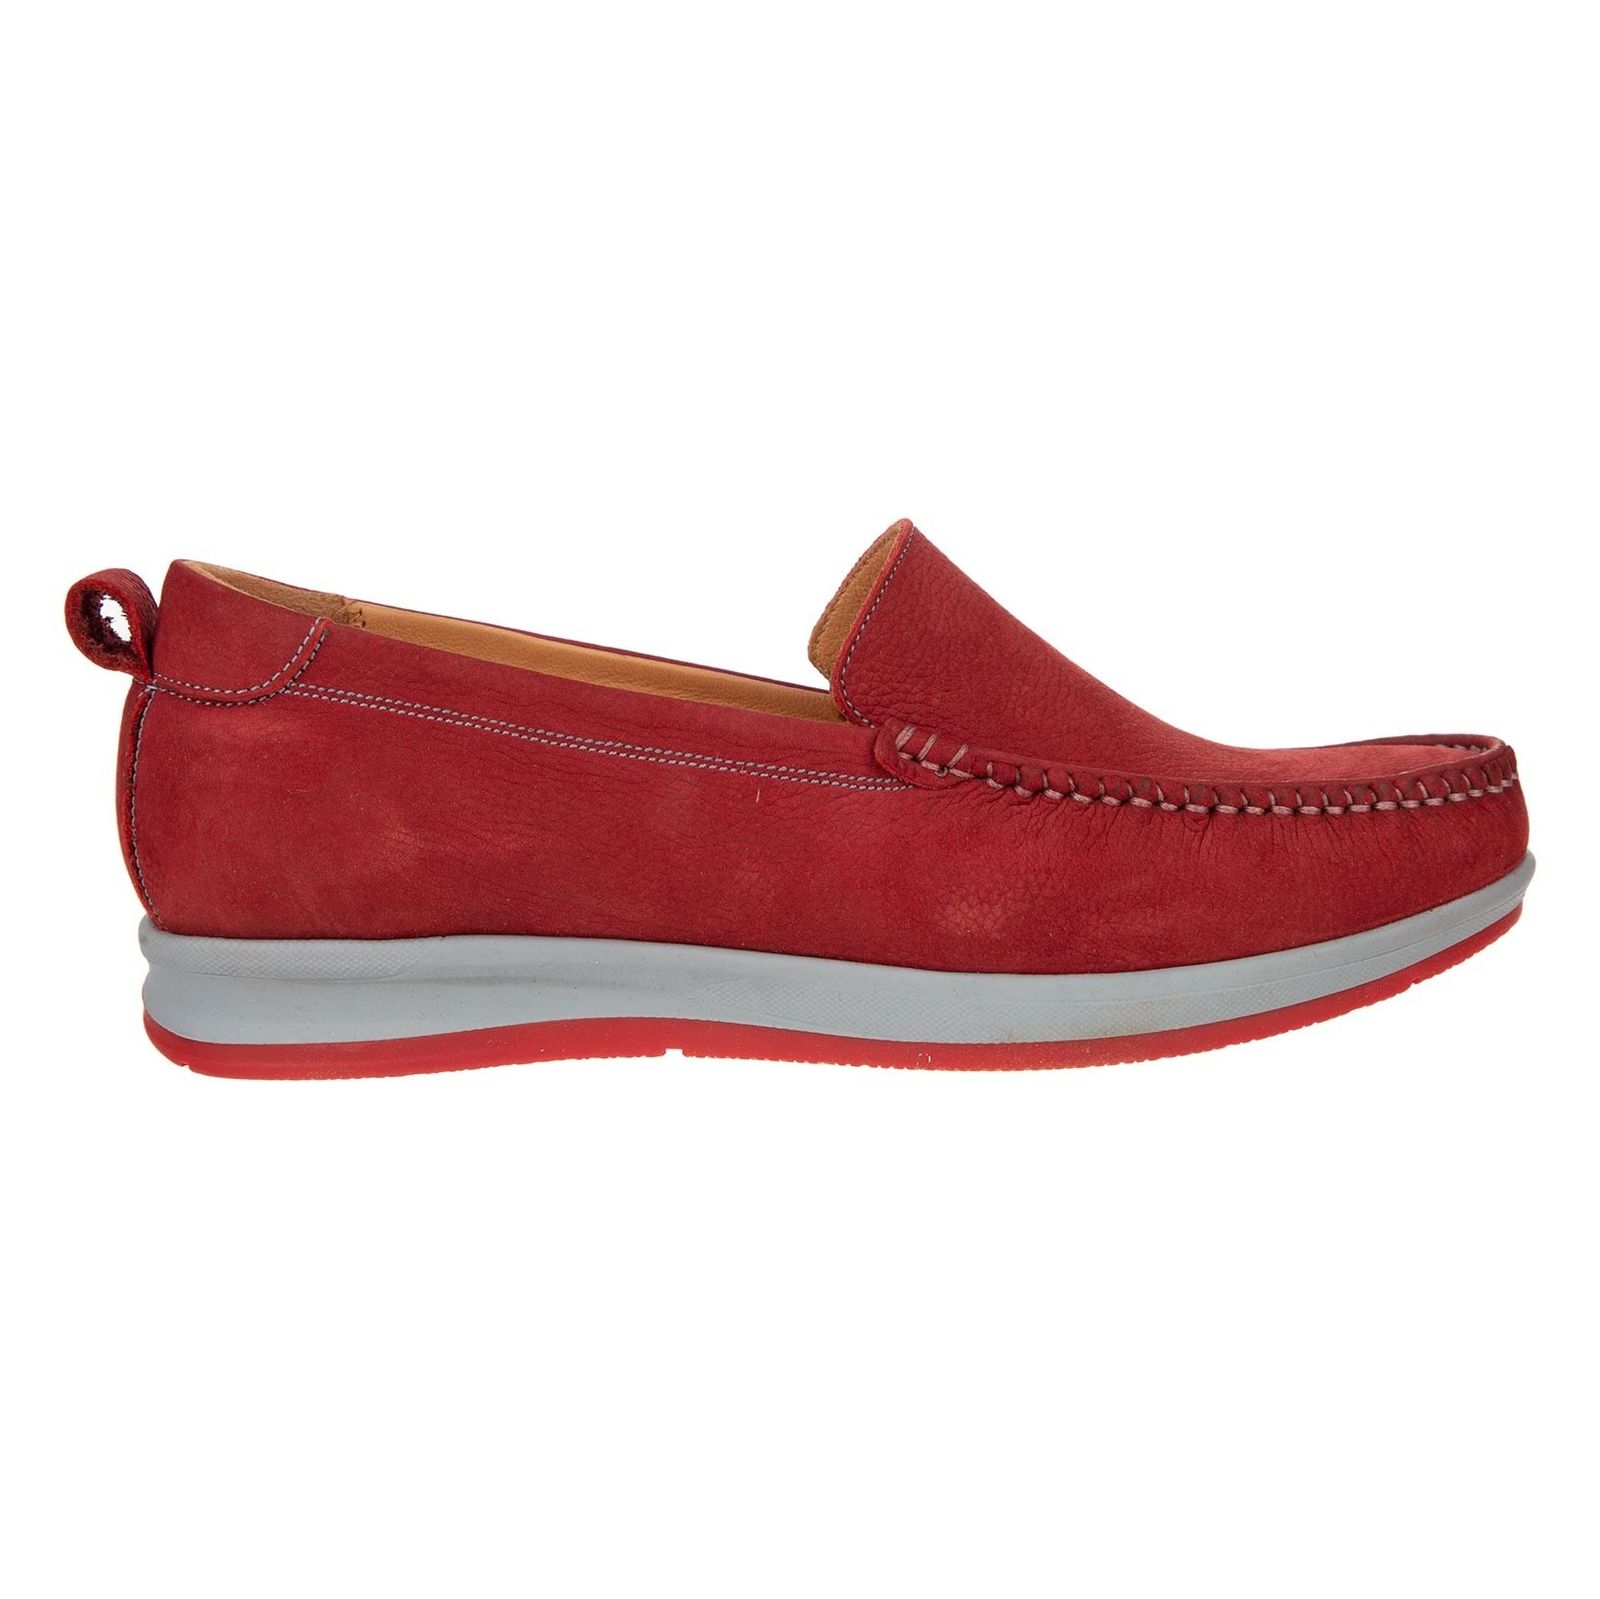 کفش تخت چرم زنانه - برتونیکس - قرمز - 1